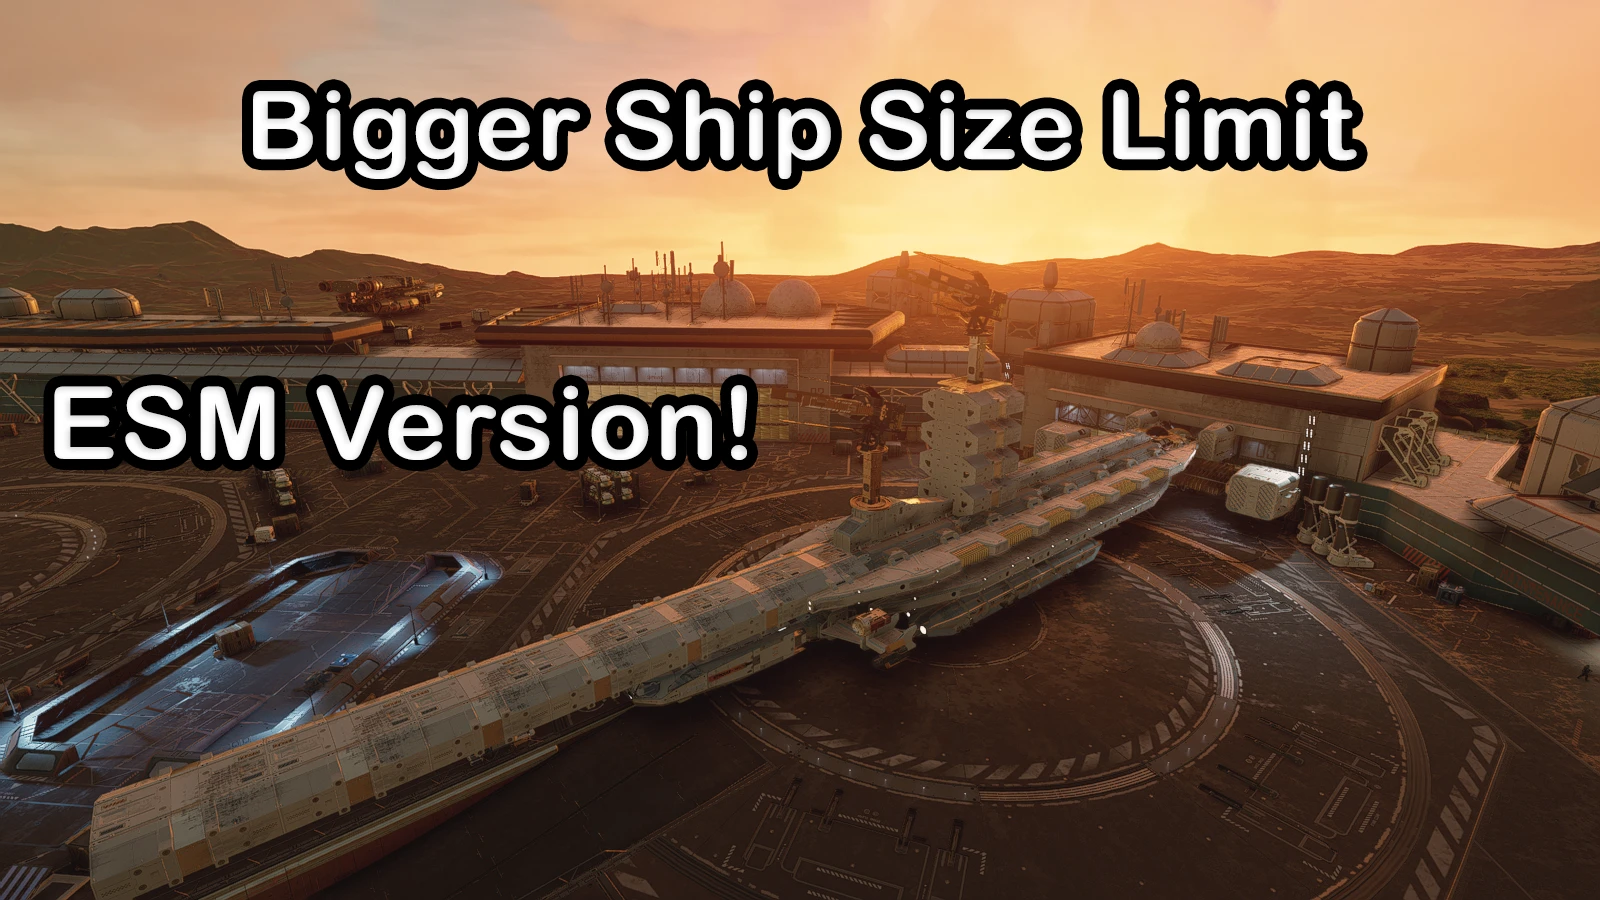 Link Below -ESM Version - Increased Ship Size Limit